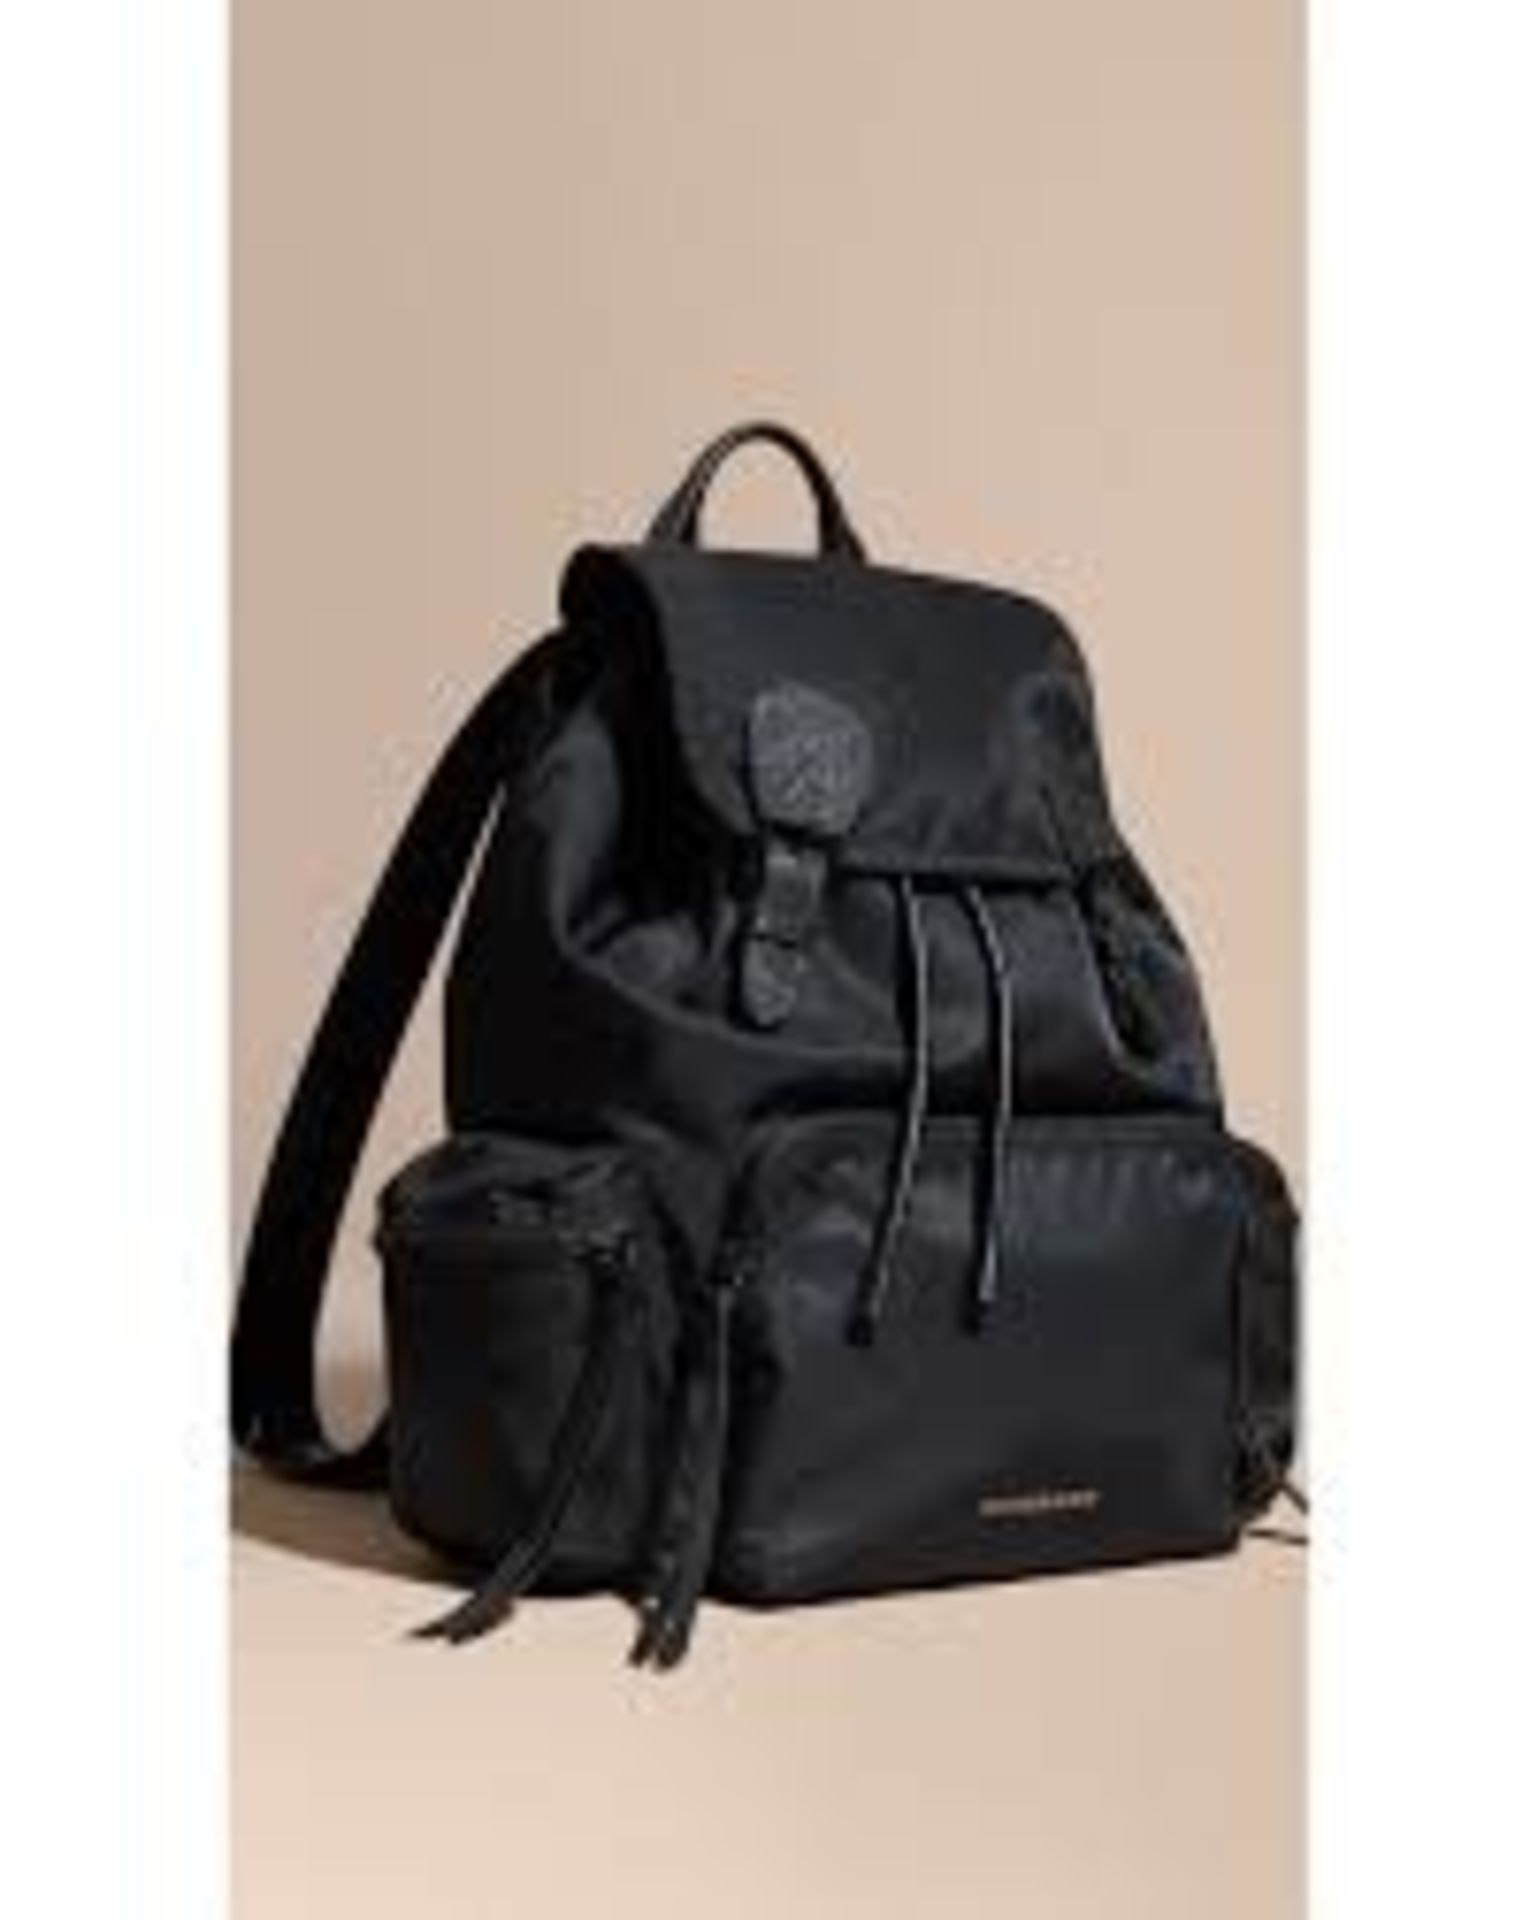 BURBERRY black nylon backpack. Personalised EB. 35x35cm